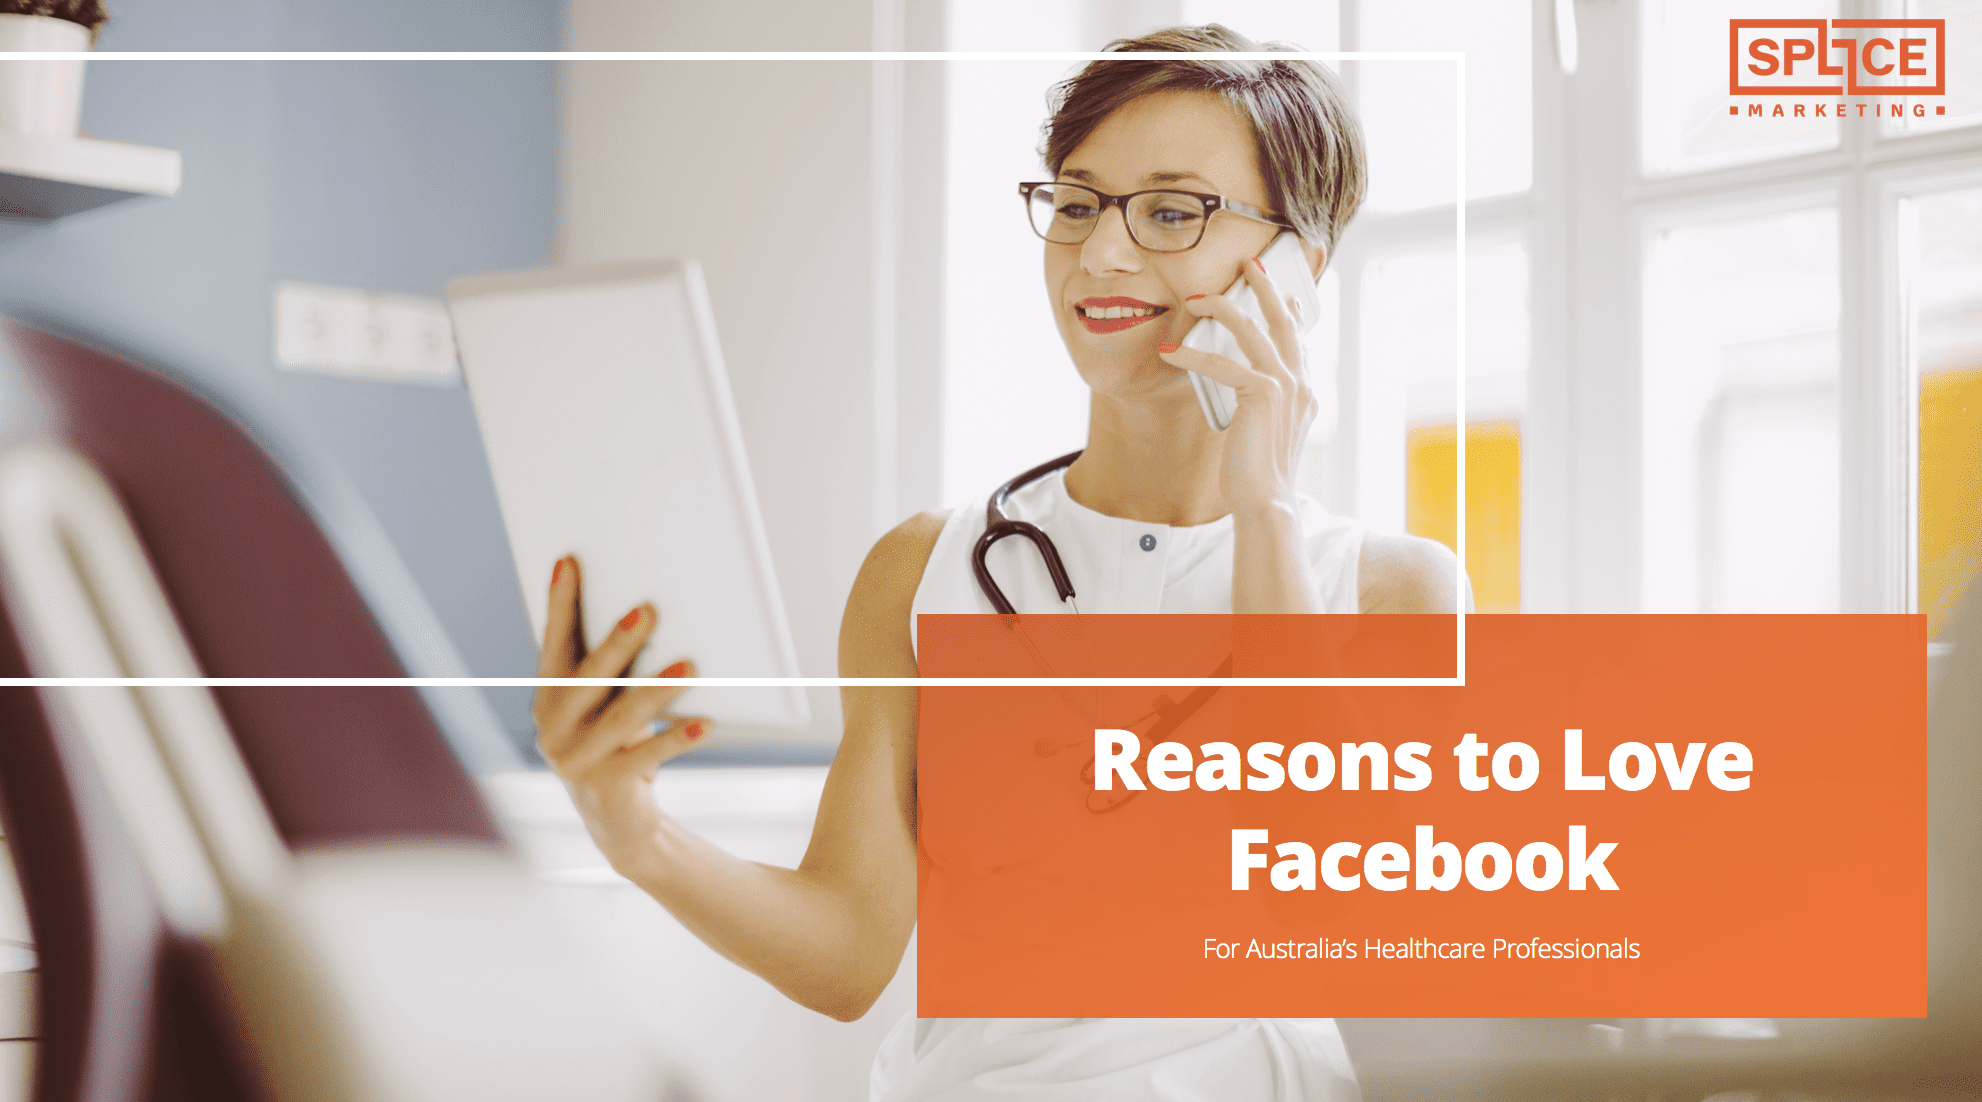 Reasons Healthcare Professionals Should Love Facebook